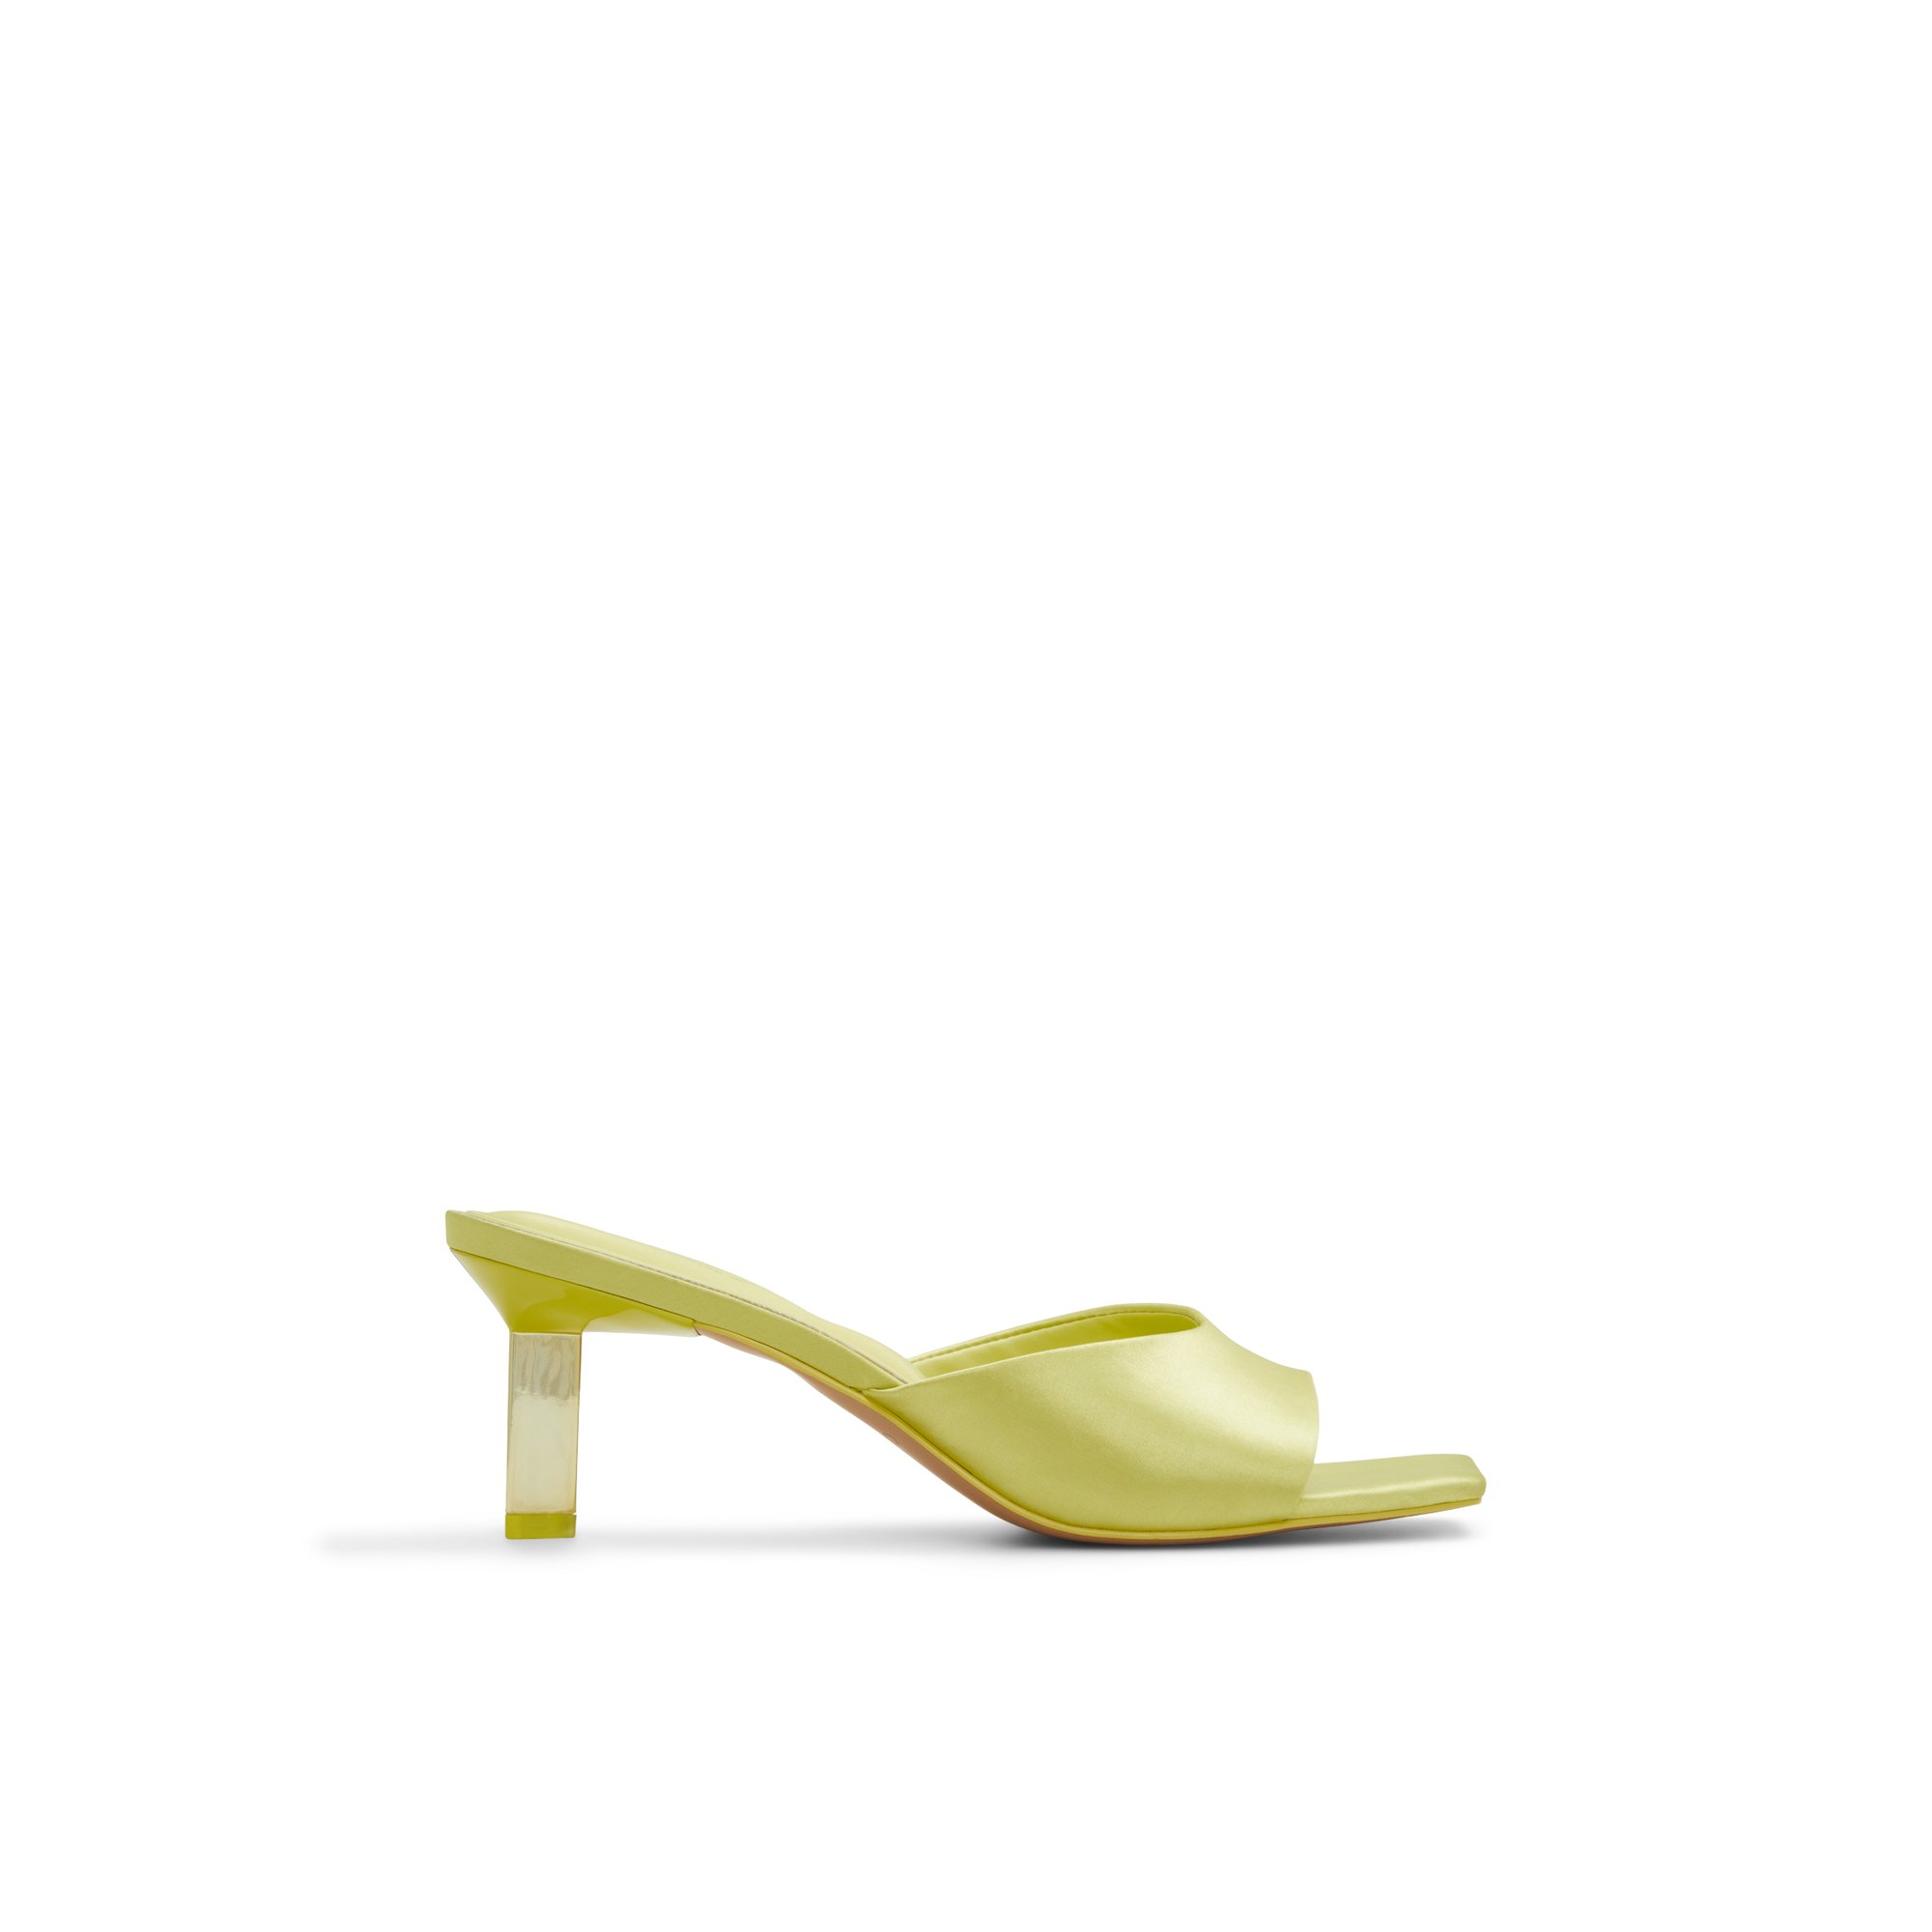 ALDO Posie - Women's Mule Slides - Yellow